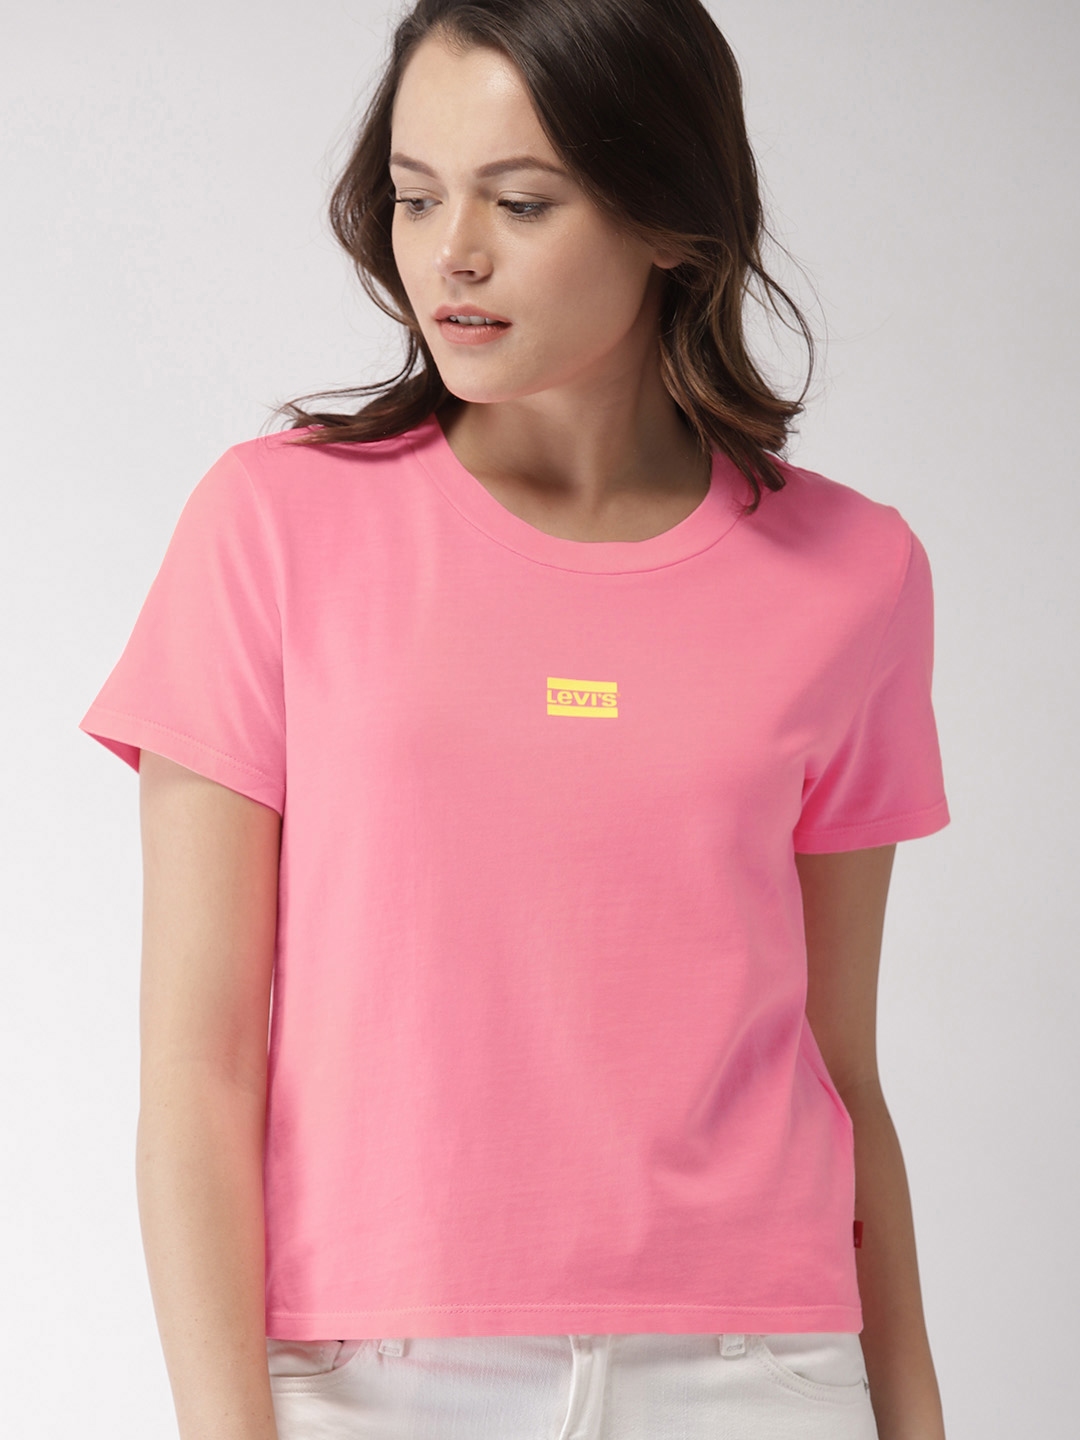 pink levi shirt